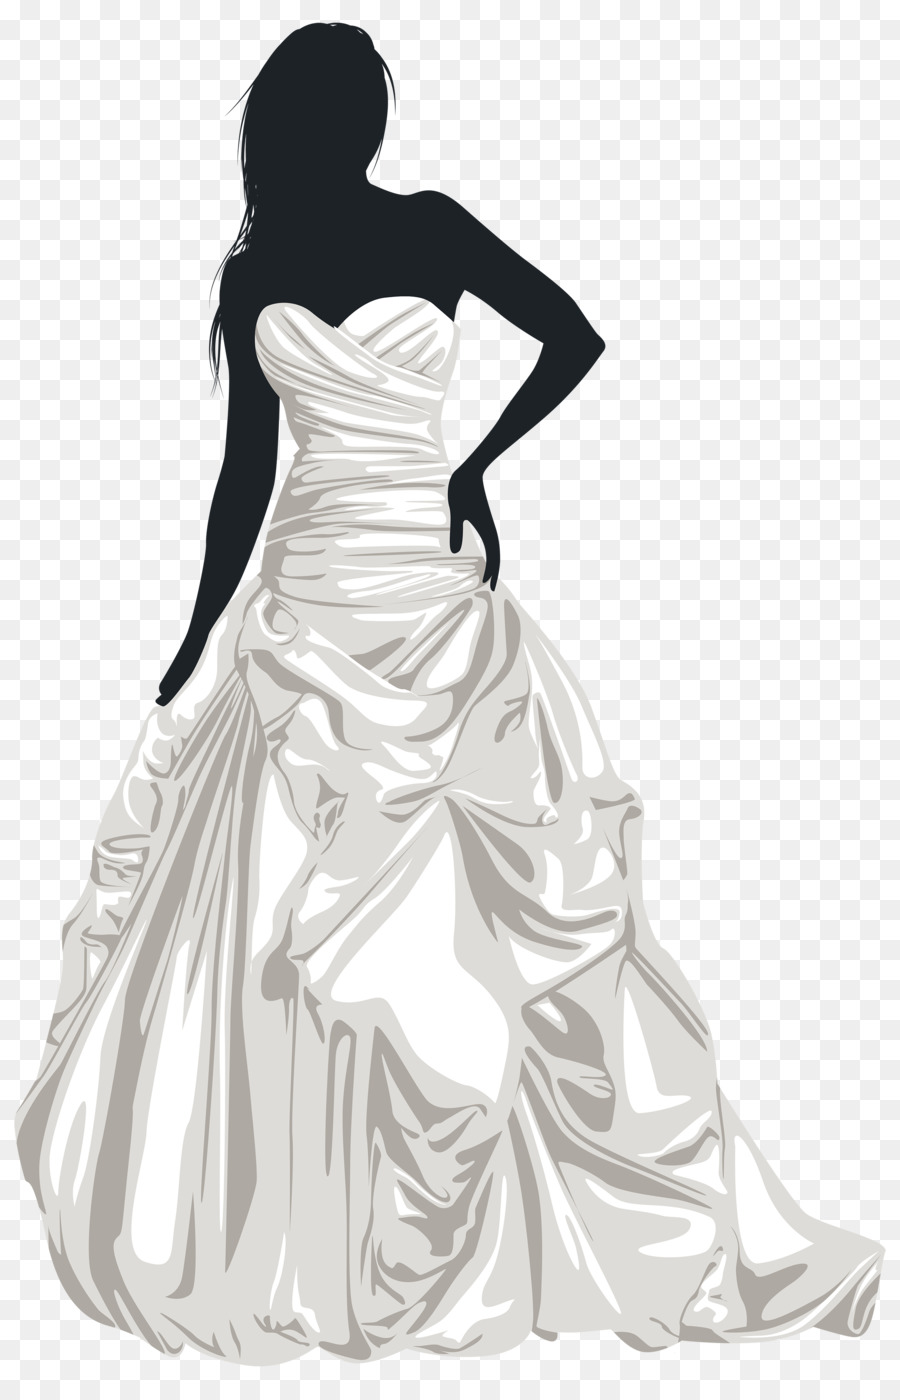 Bride Silhouette Wedding dress Clip art - wedding dress png download - 2268*3500 - Free Transparent Bride png Download.